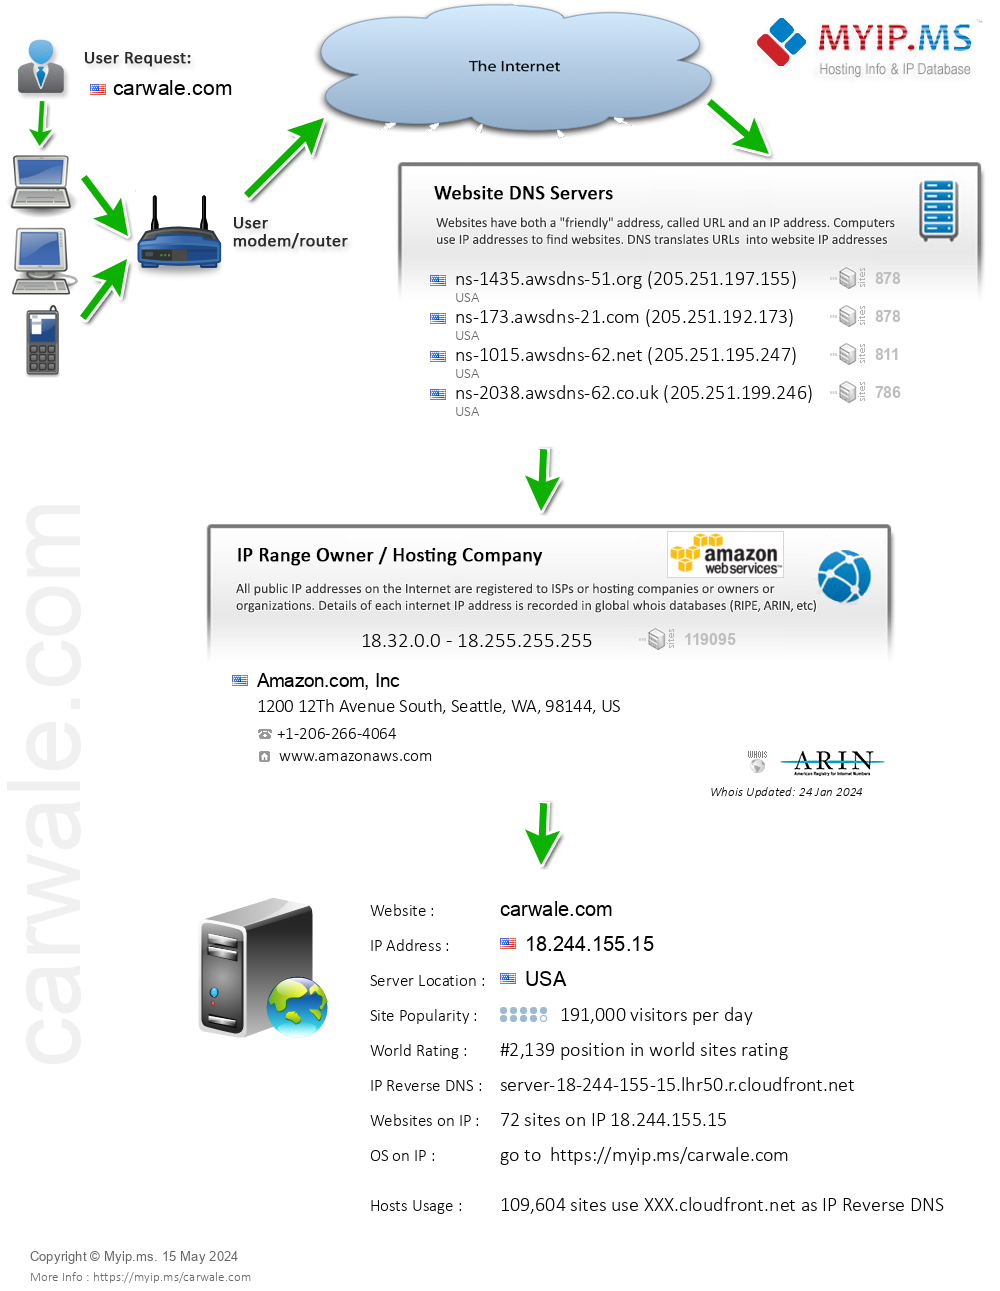 Carwale.com - Website Hosting Visual IP Diagram